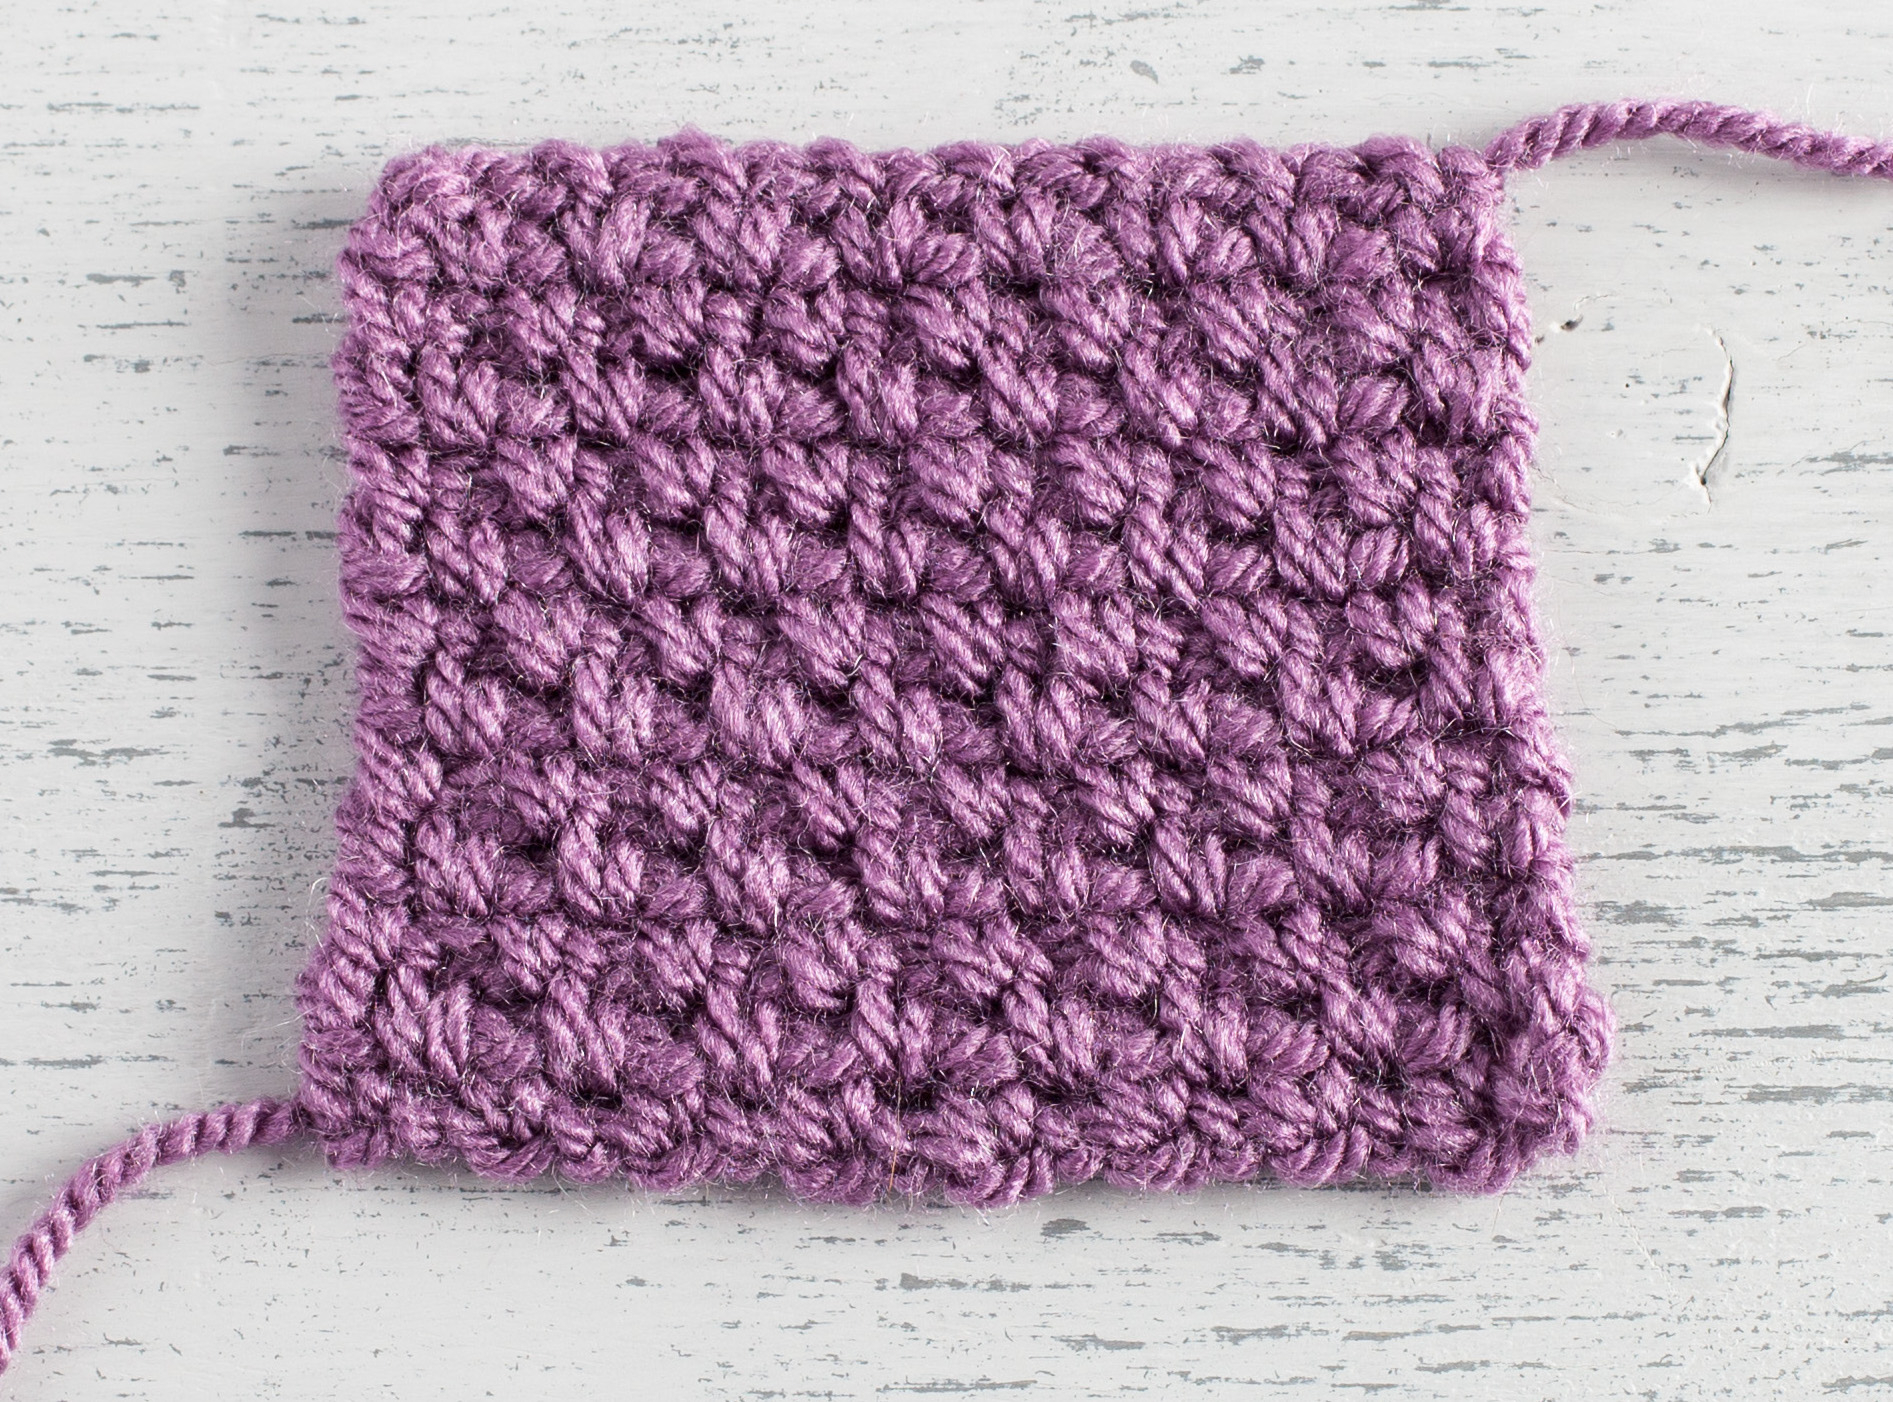 Moss Stitch Scarf Knitting Pattern How To Crochet Granite Stitch